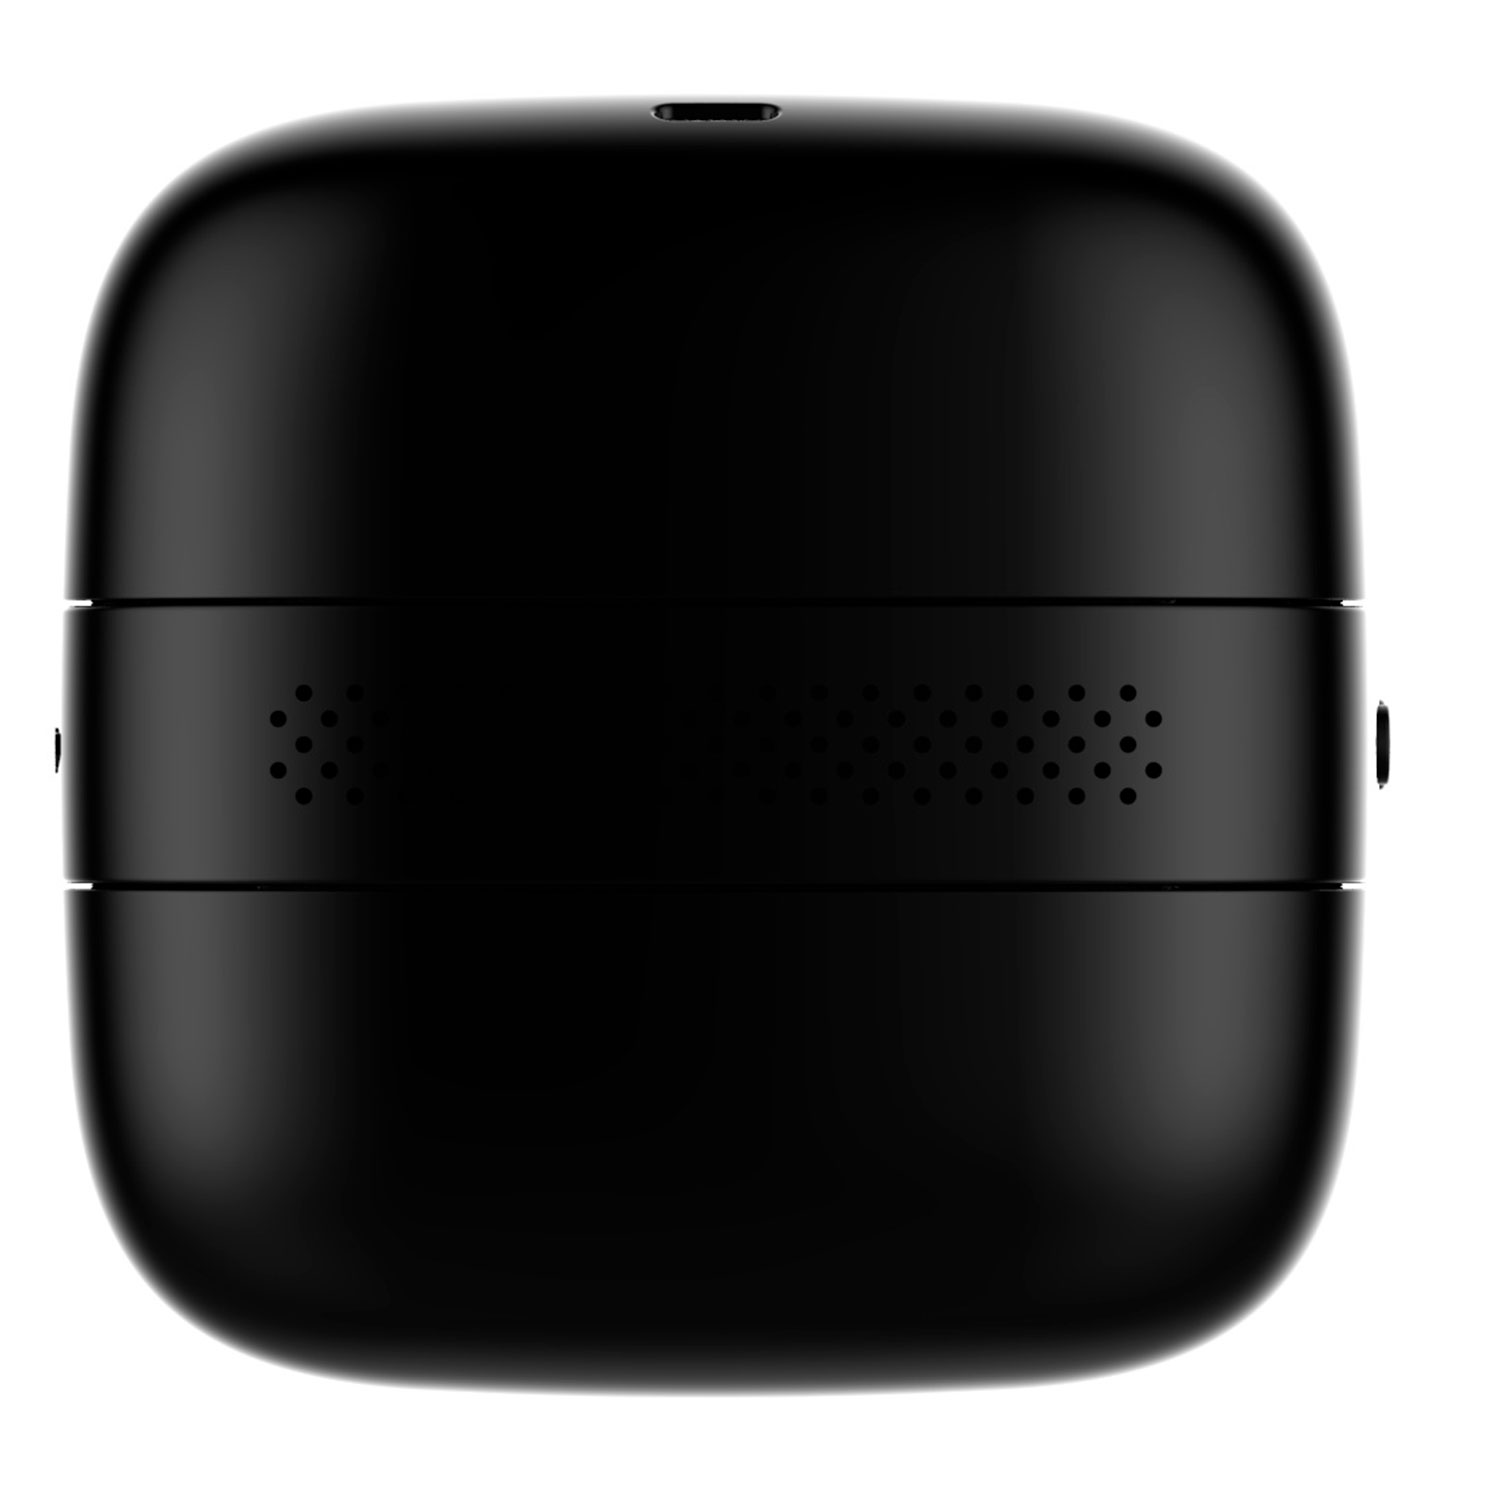 Кубик VR Cinemood Чёрный Проектор 360 Видео Игры и YouTube